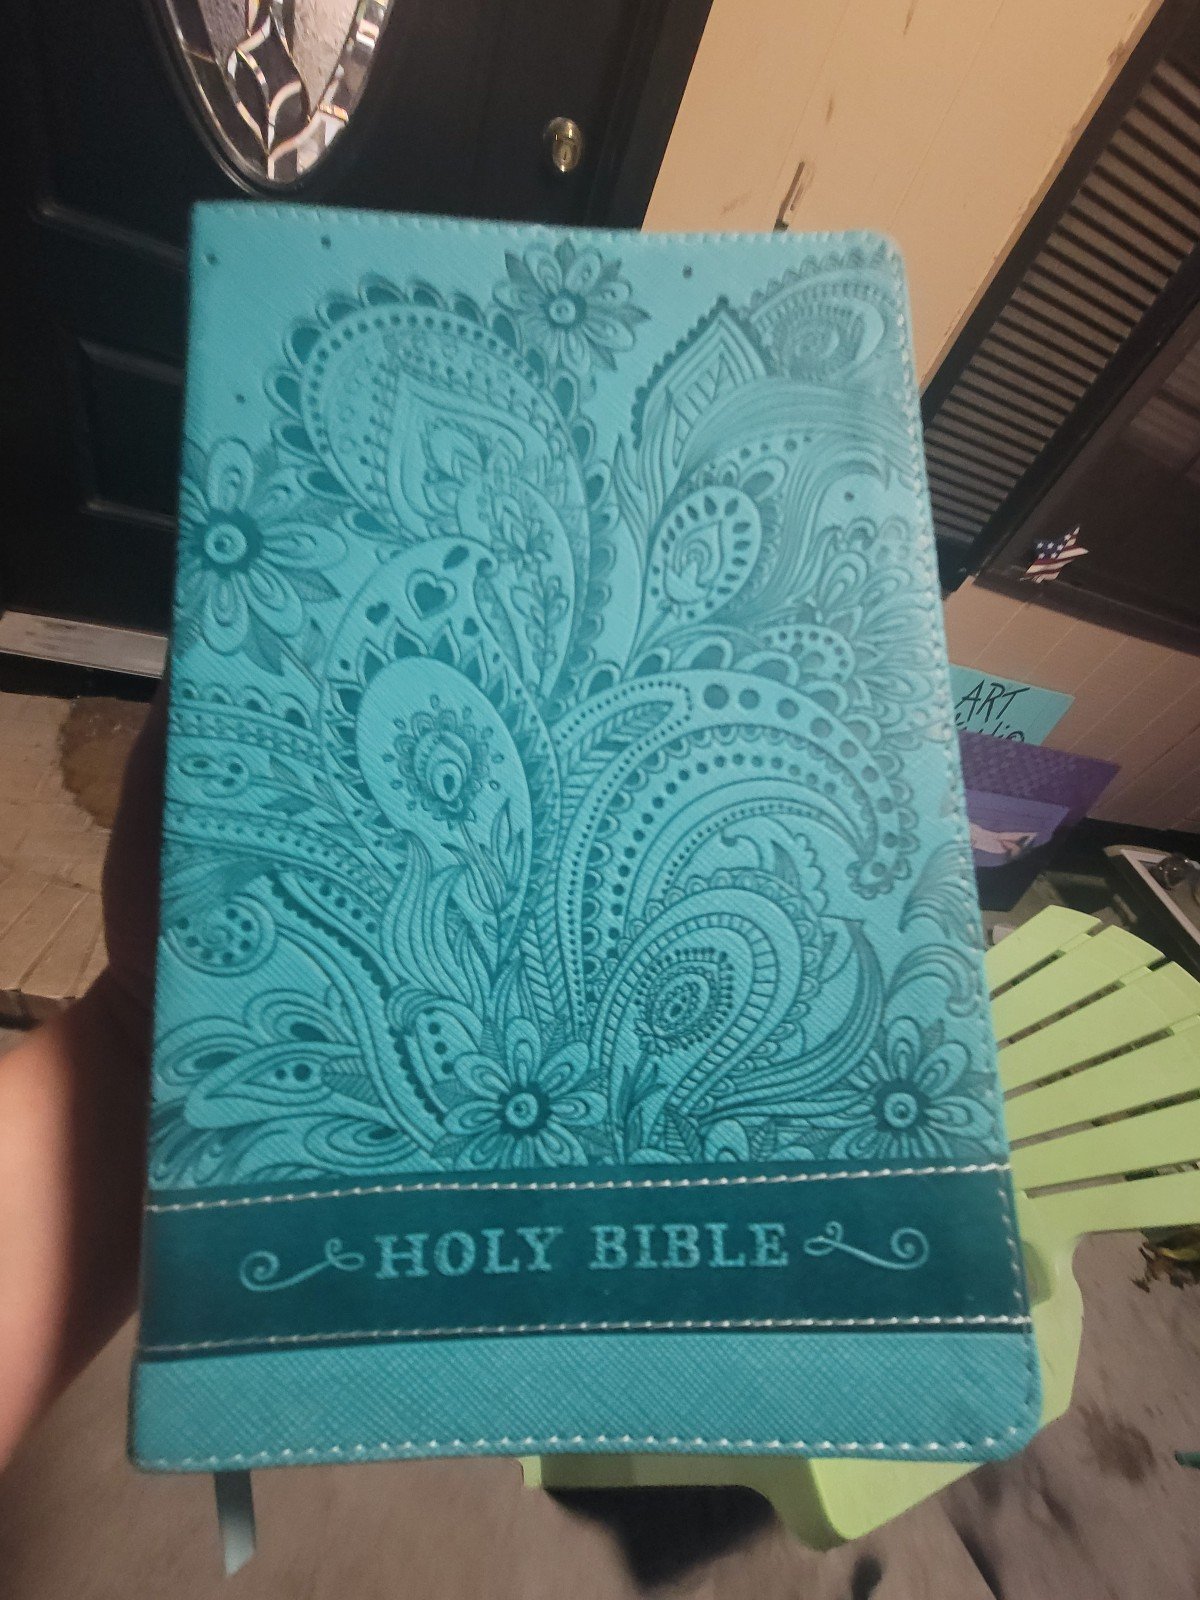 Teenage Bible cUe0ZLAFV